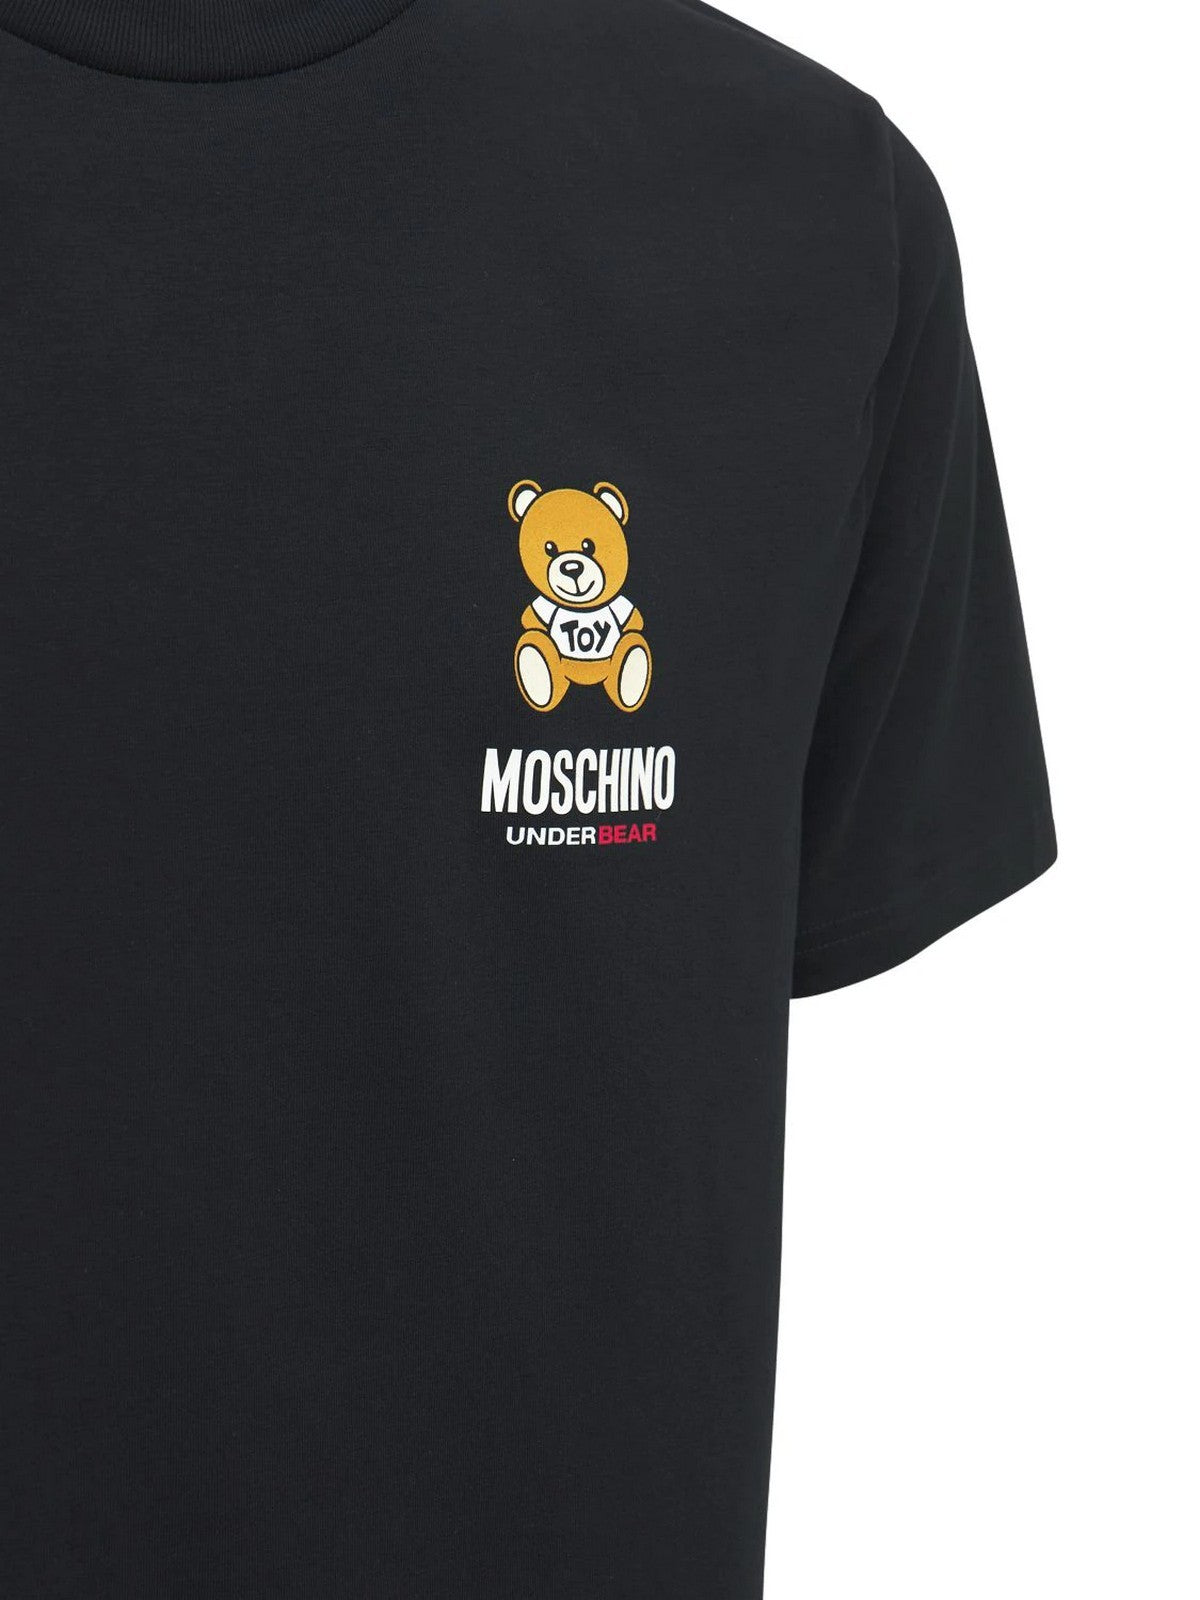 MOSCHINO UNDERWEAR T-Shirt e Polo Uomo  V1A0784 4410 0555 Nero